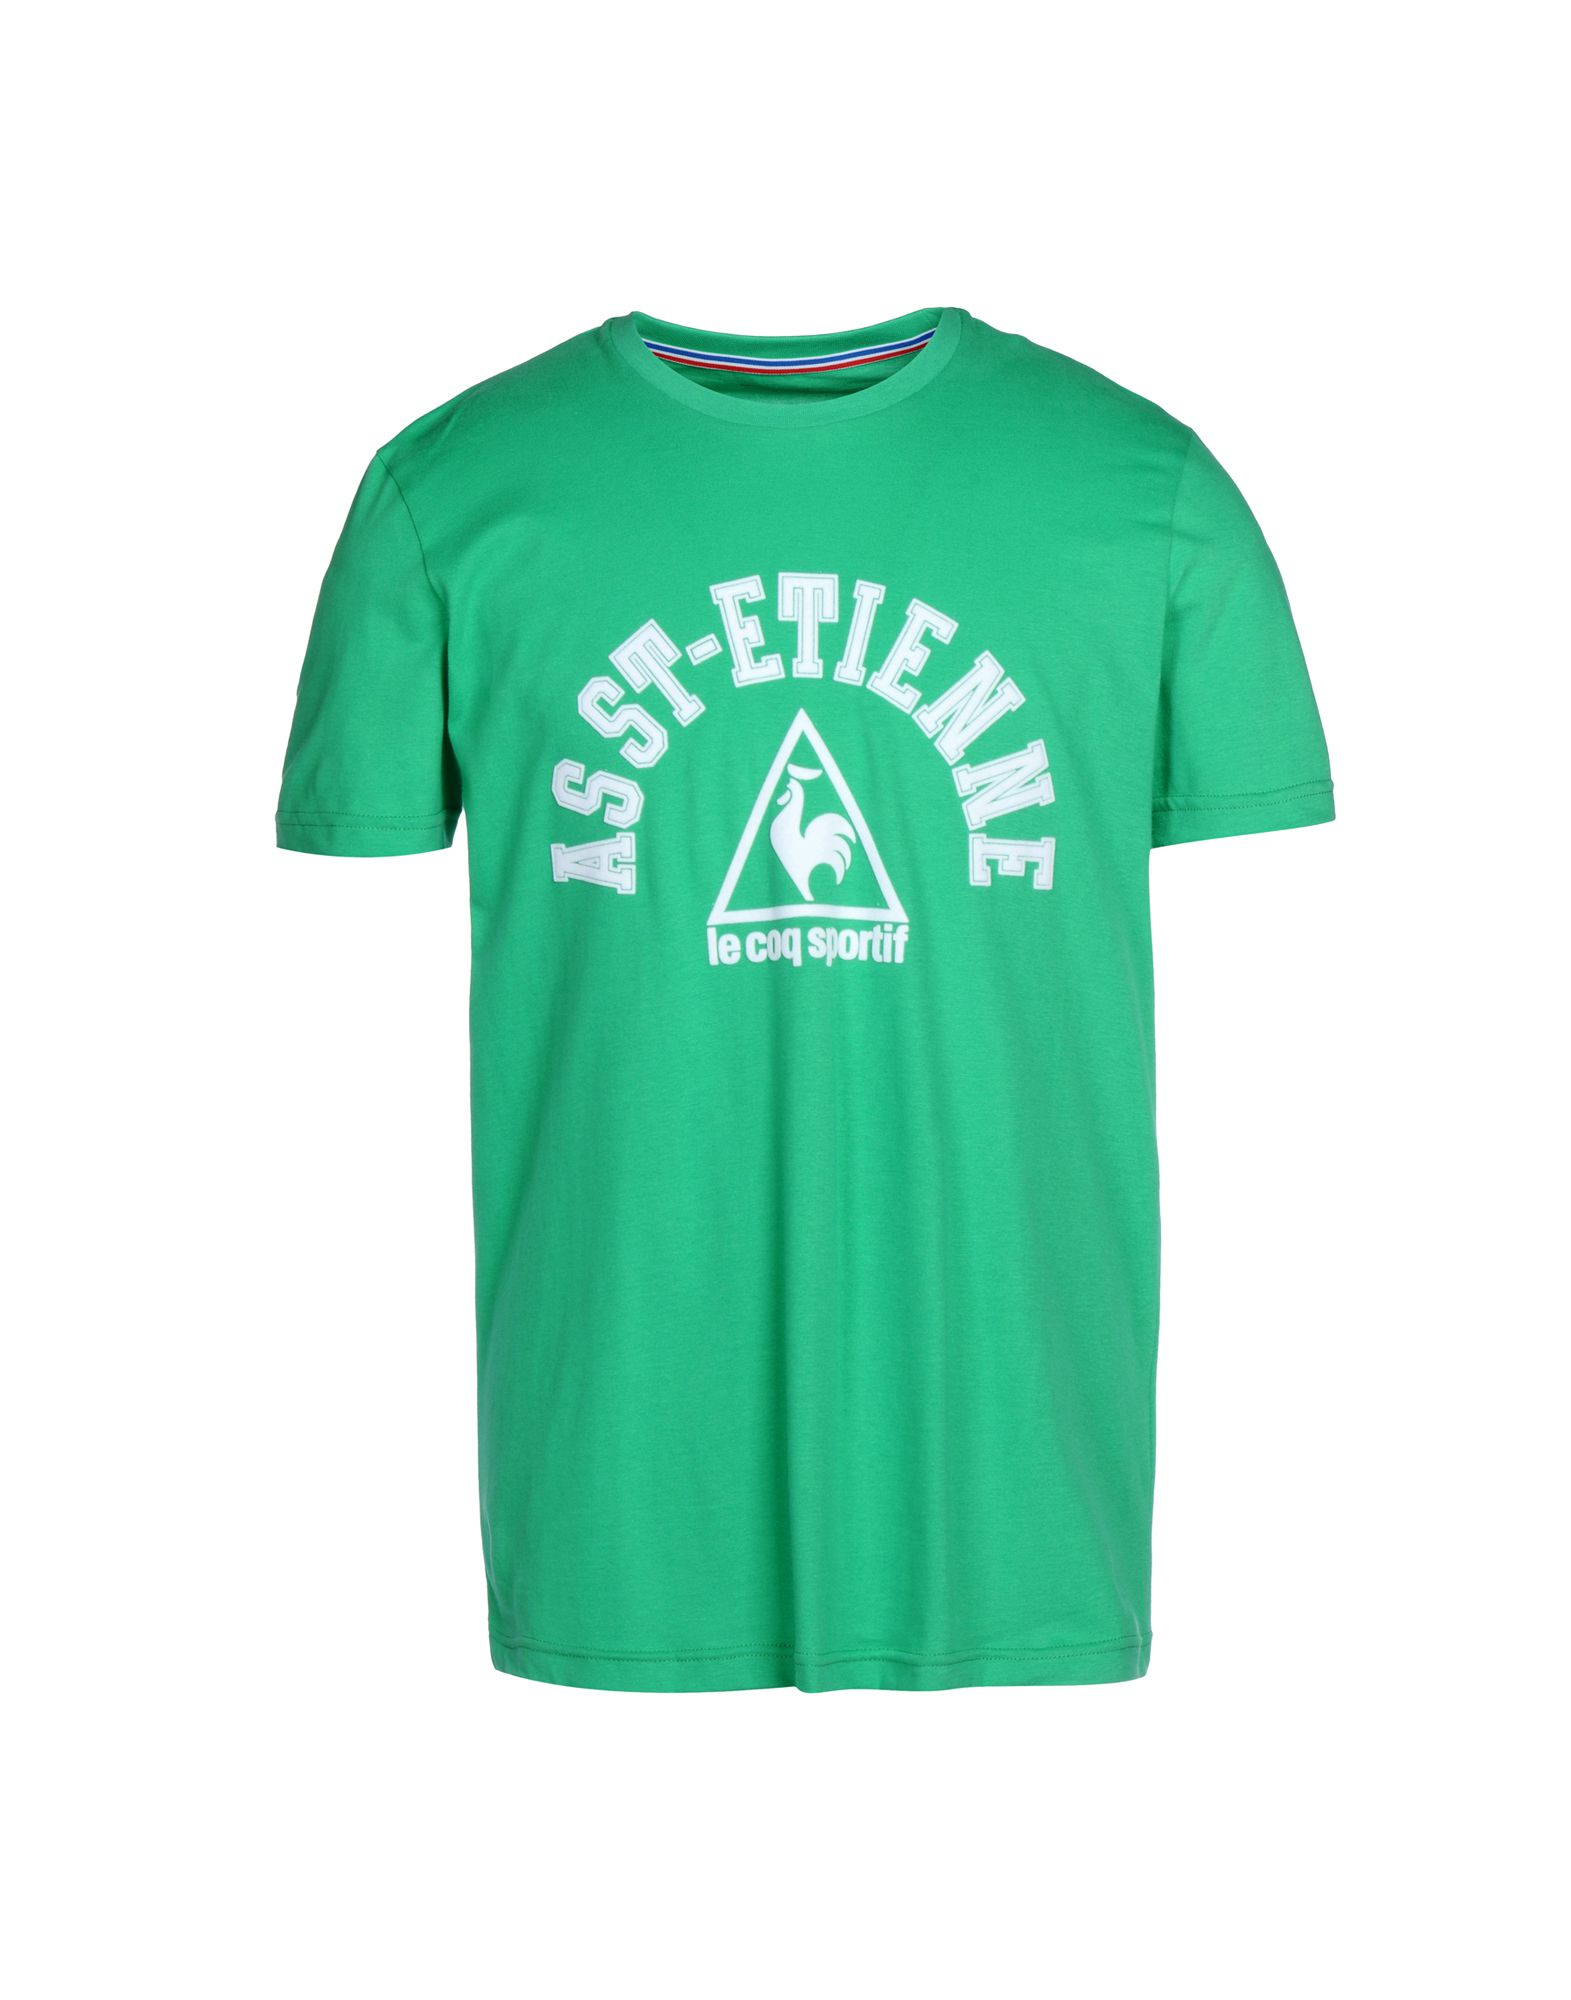 Lyst - Le Coq Sportif T-shirt in Green for Men